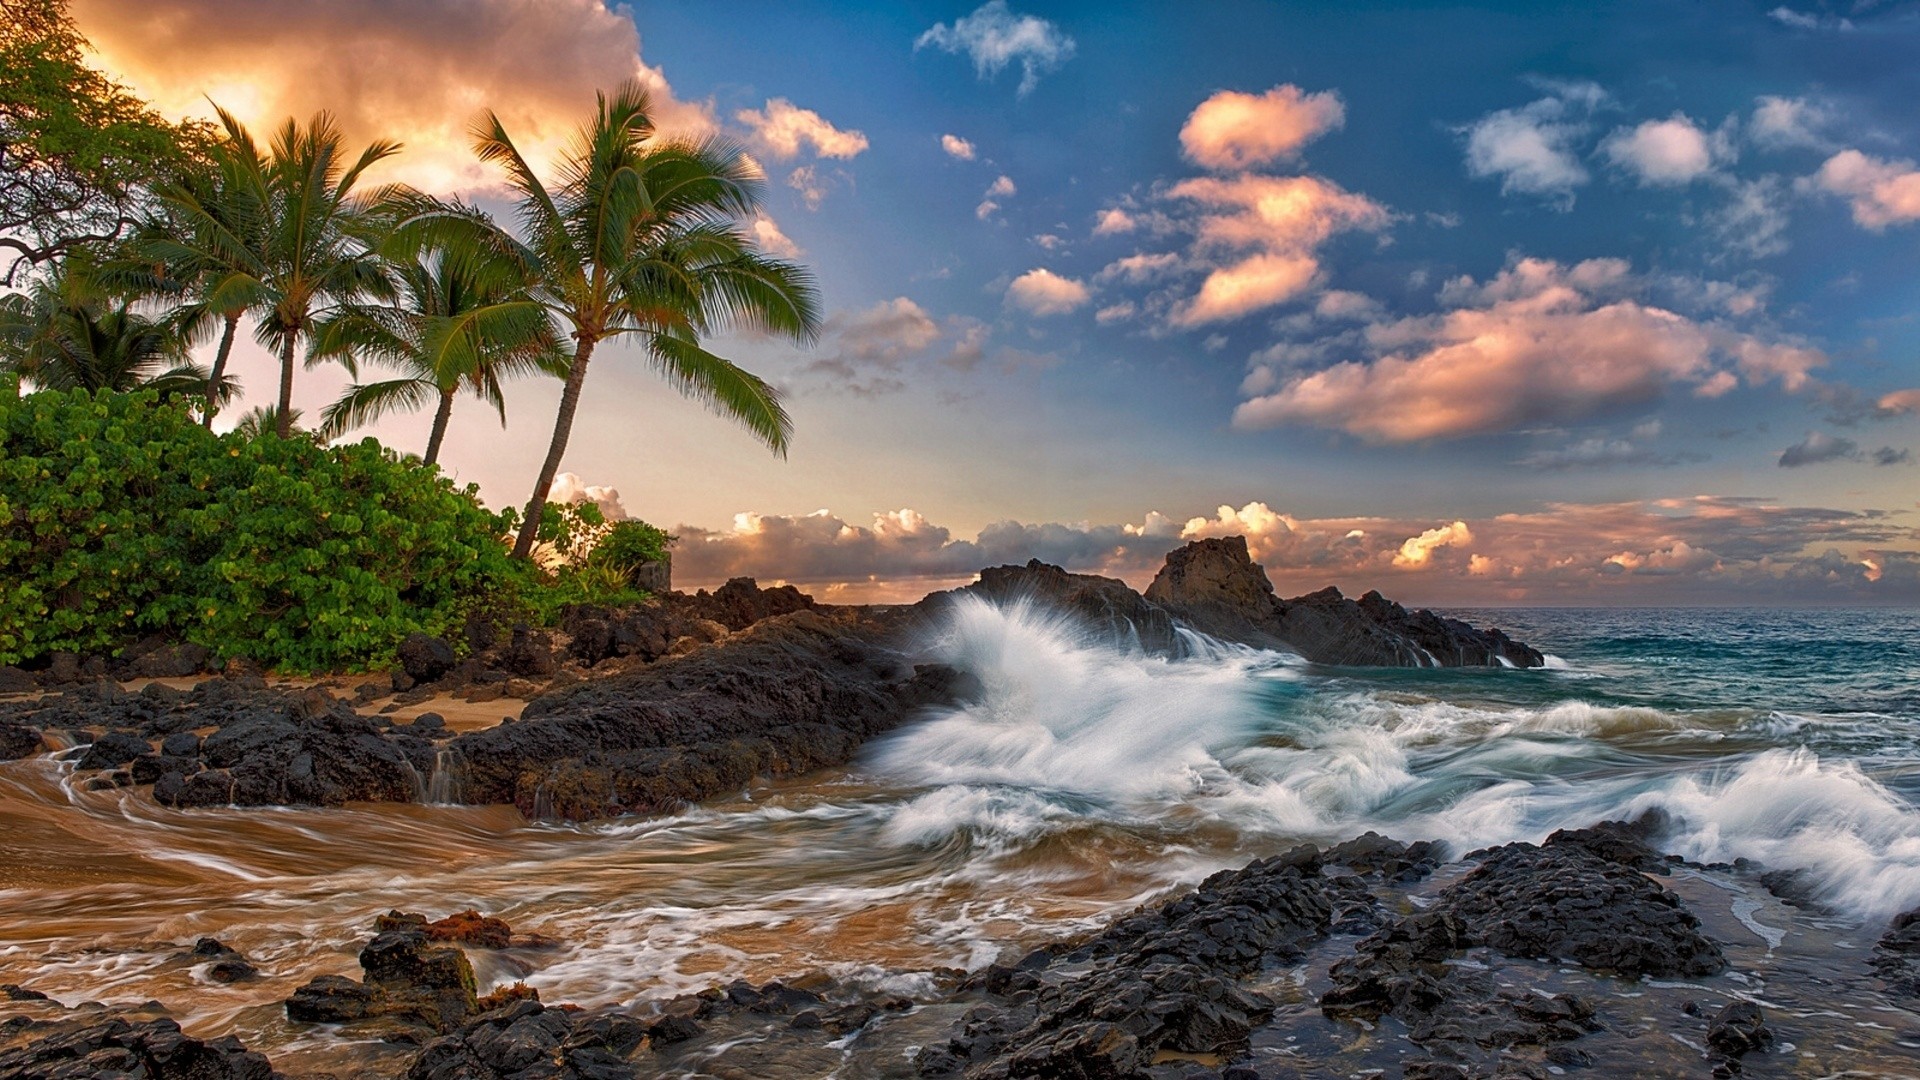 Preview wallpaper maui, hawaii, pacific ocean, rock, surf, rocks, palm